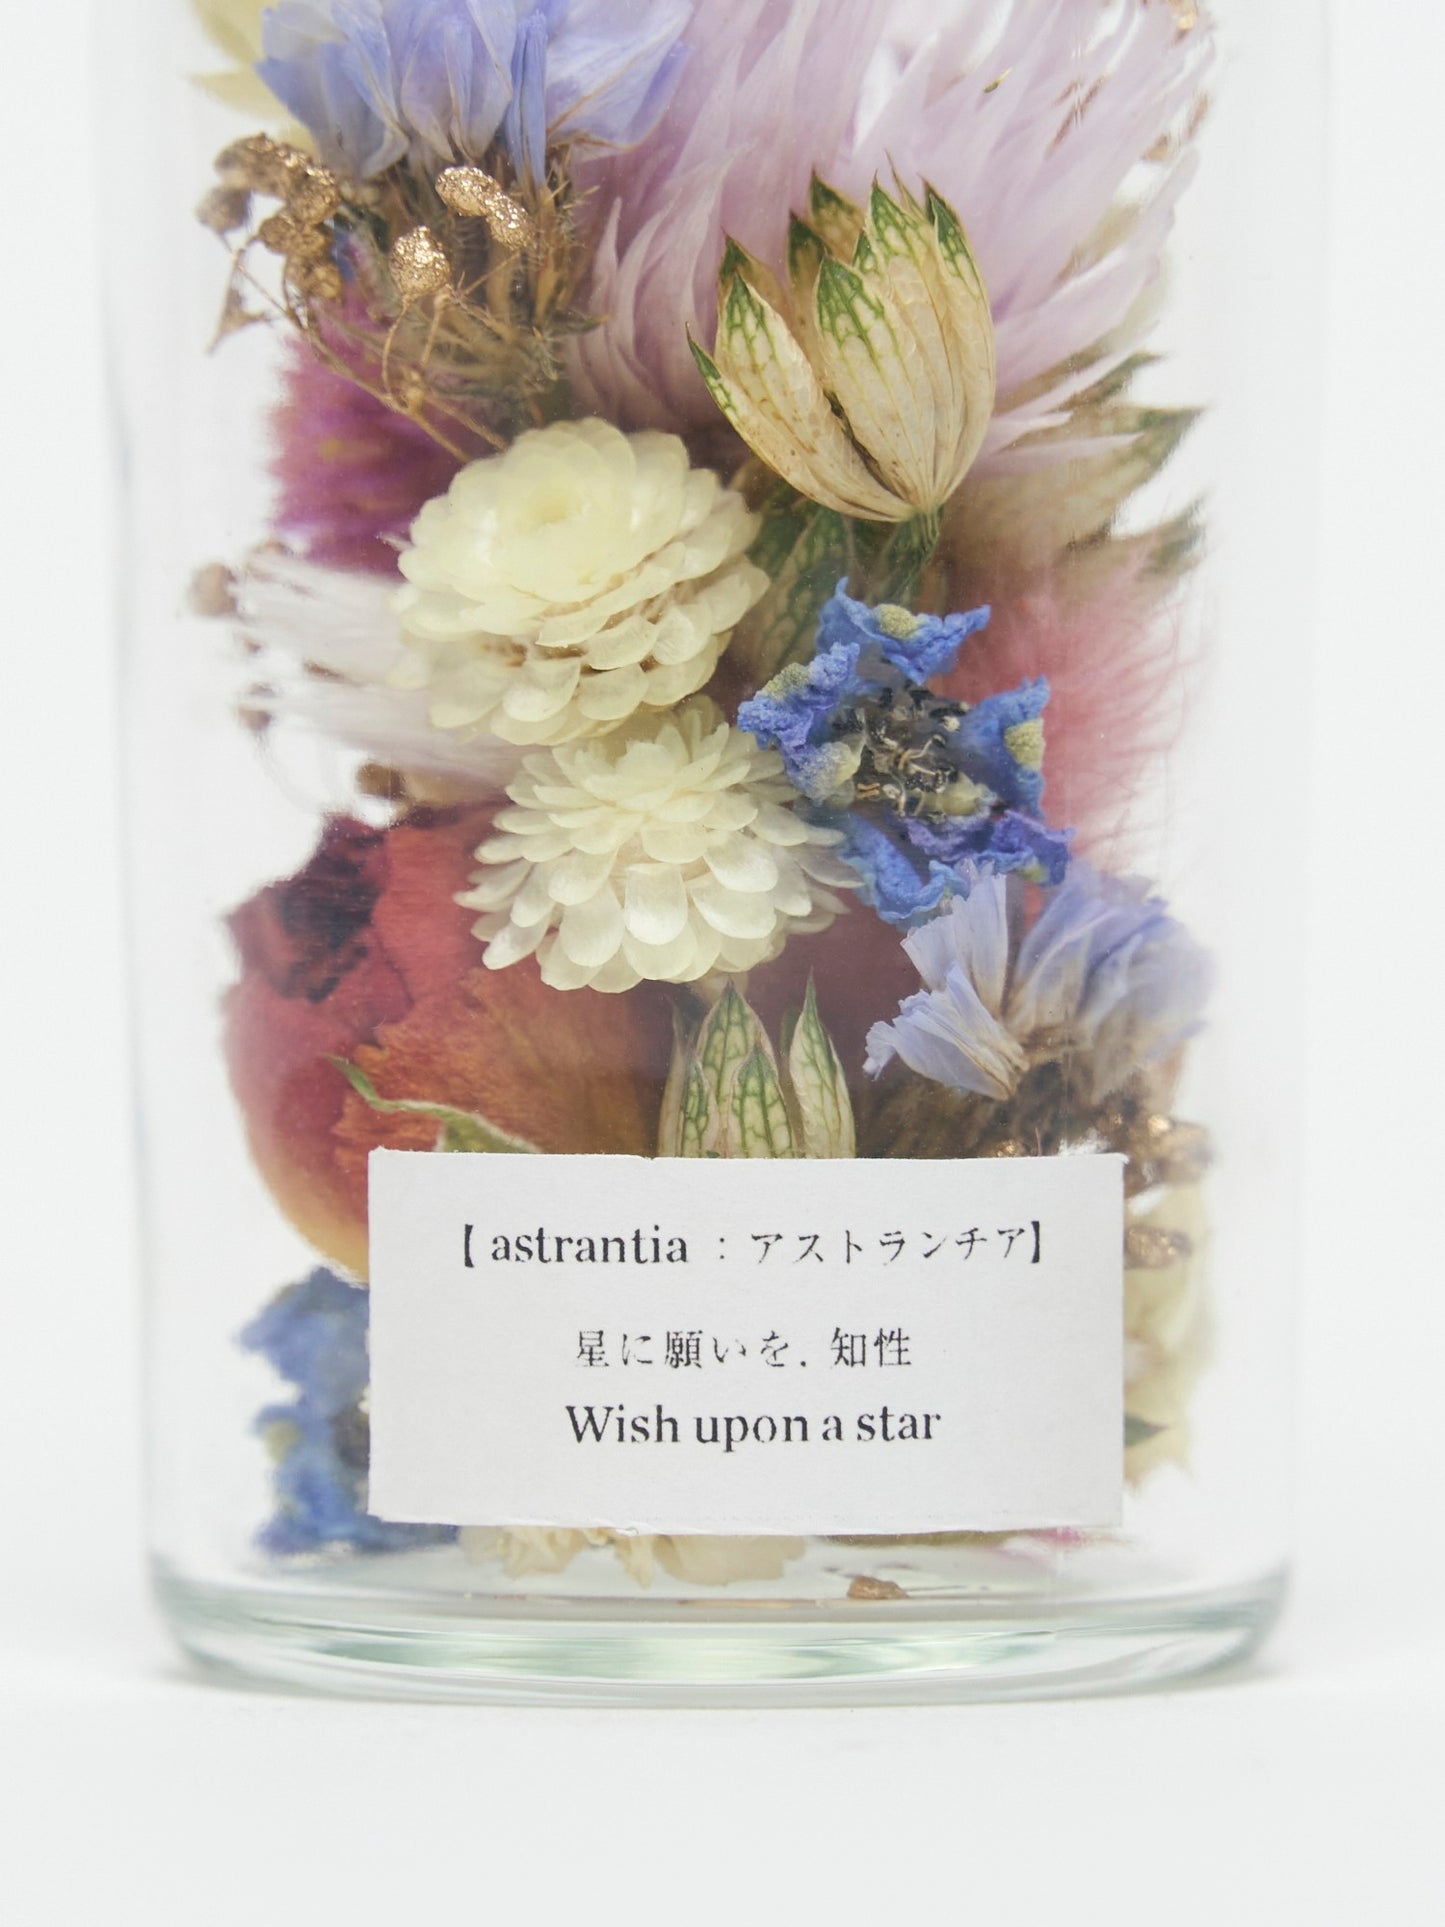 Flower language mini bottle "astrantia"